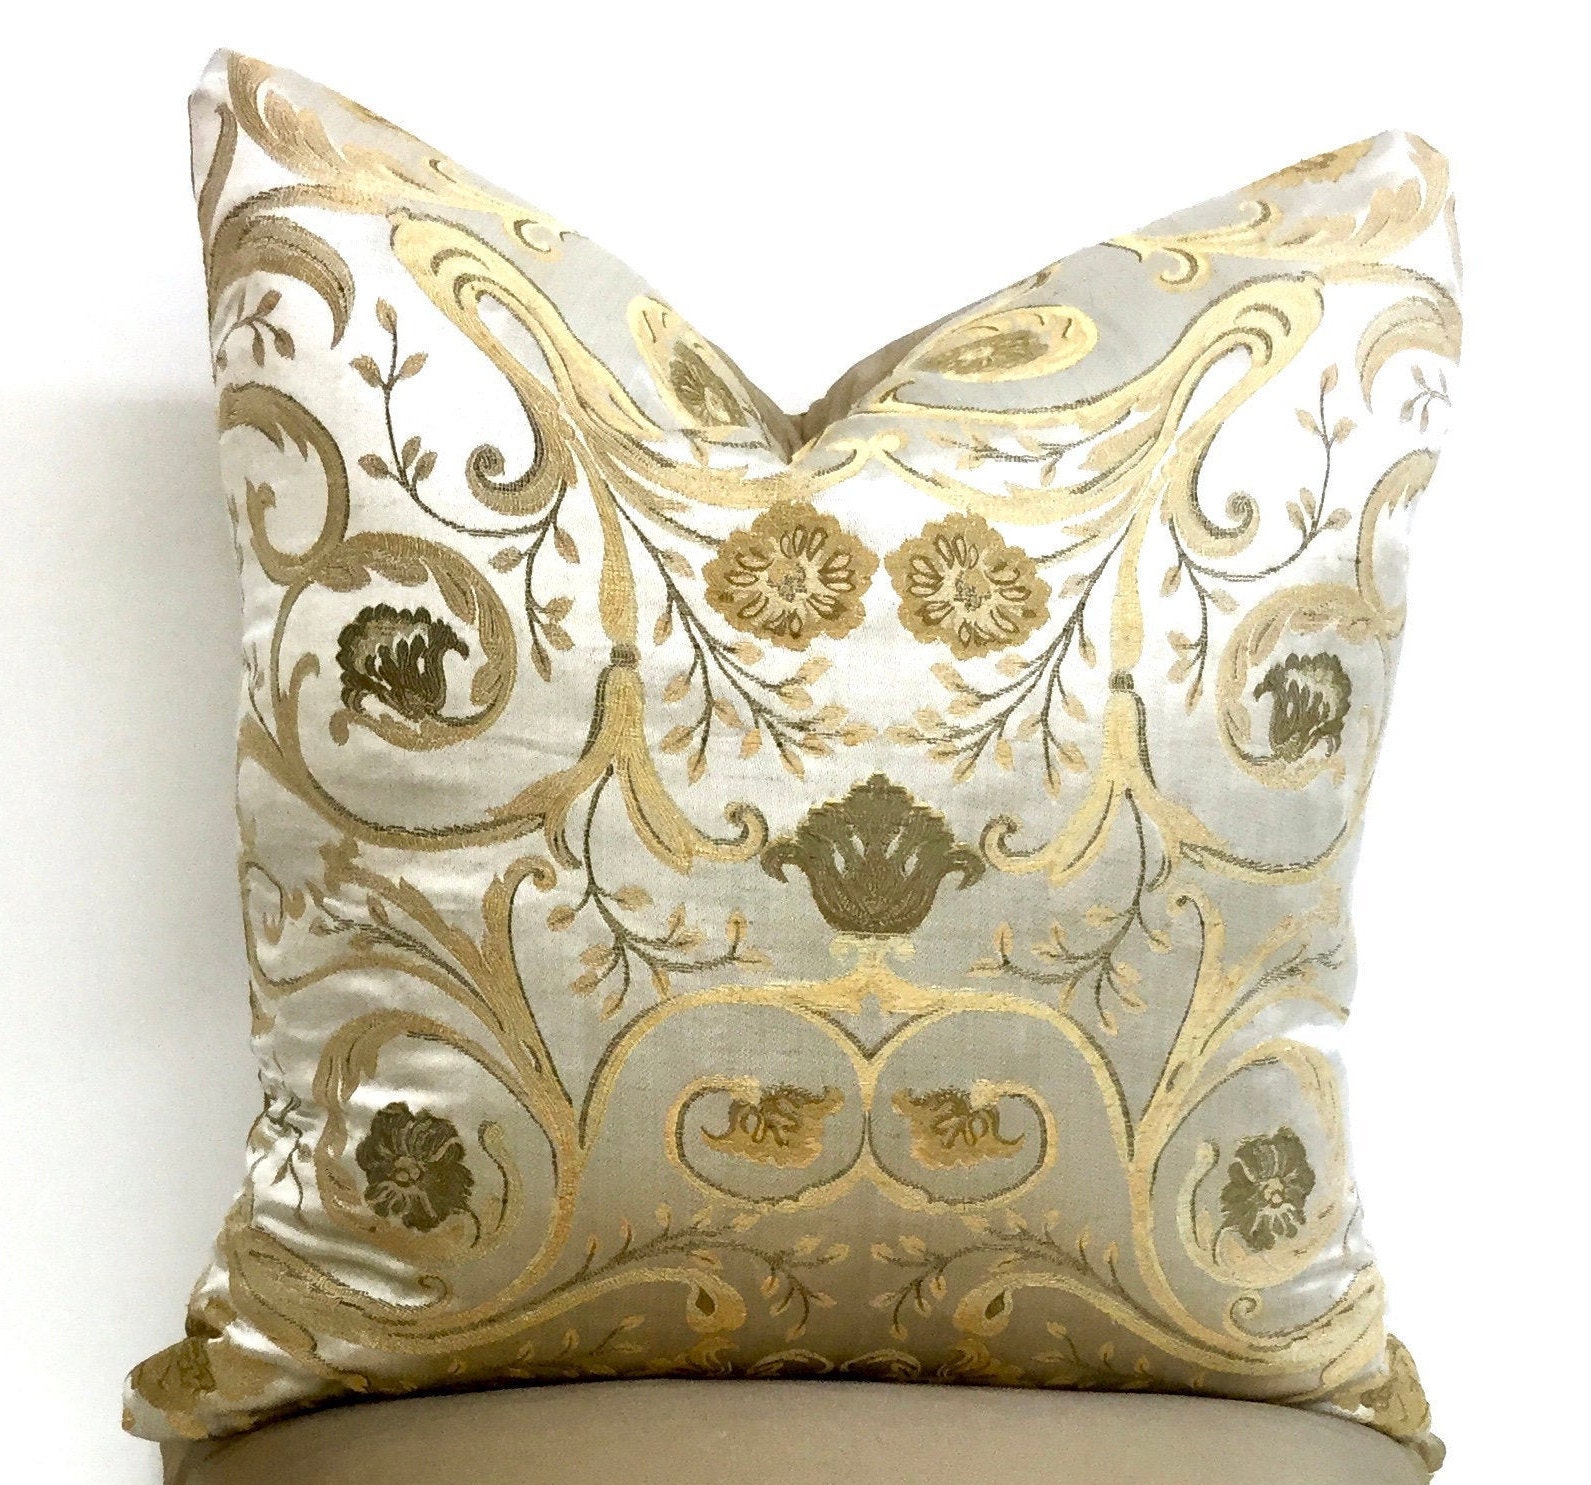 22x22" Brocade Jacquard Classic Cushion COVER Sofa Beige Home Decor Pillow Case 